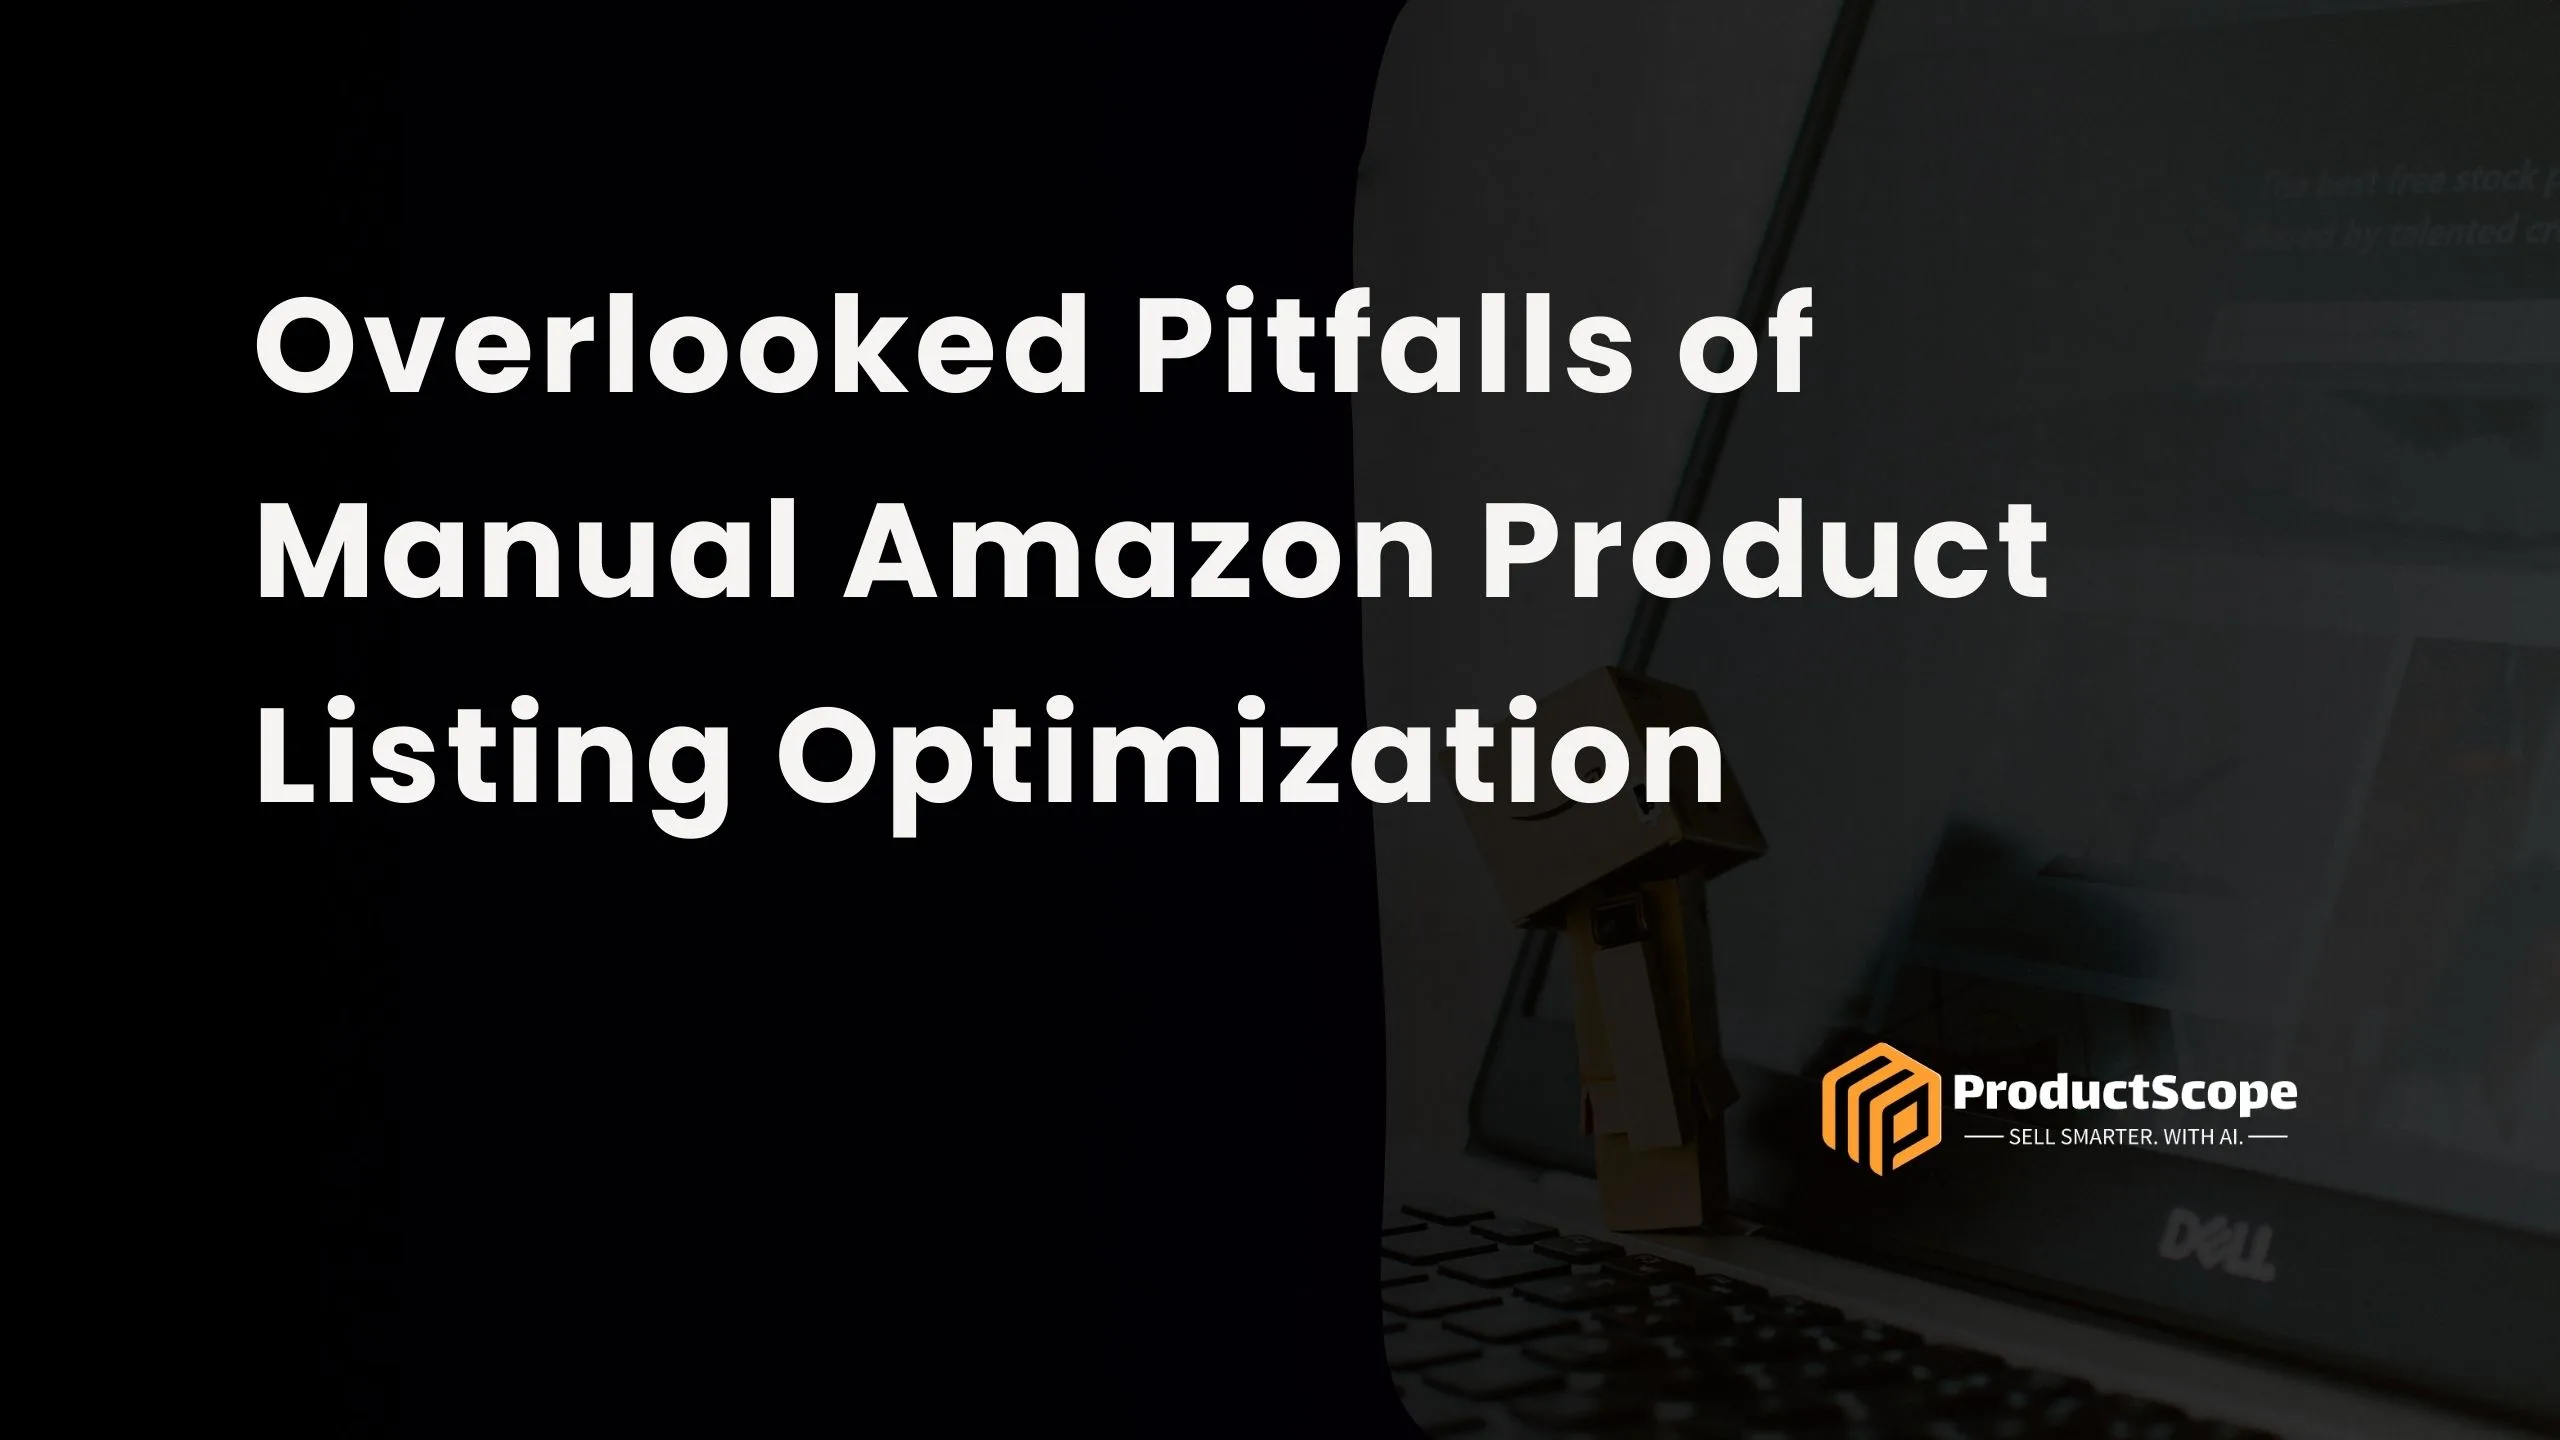 Overlooked Pitfalls of Manual Amazon Product Listing Optimization